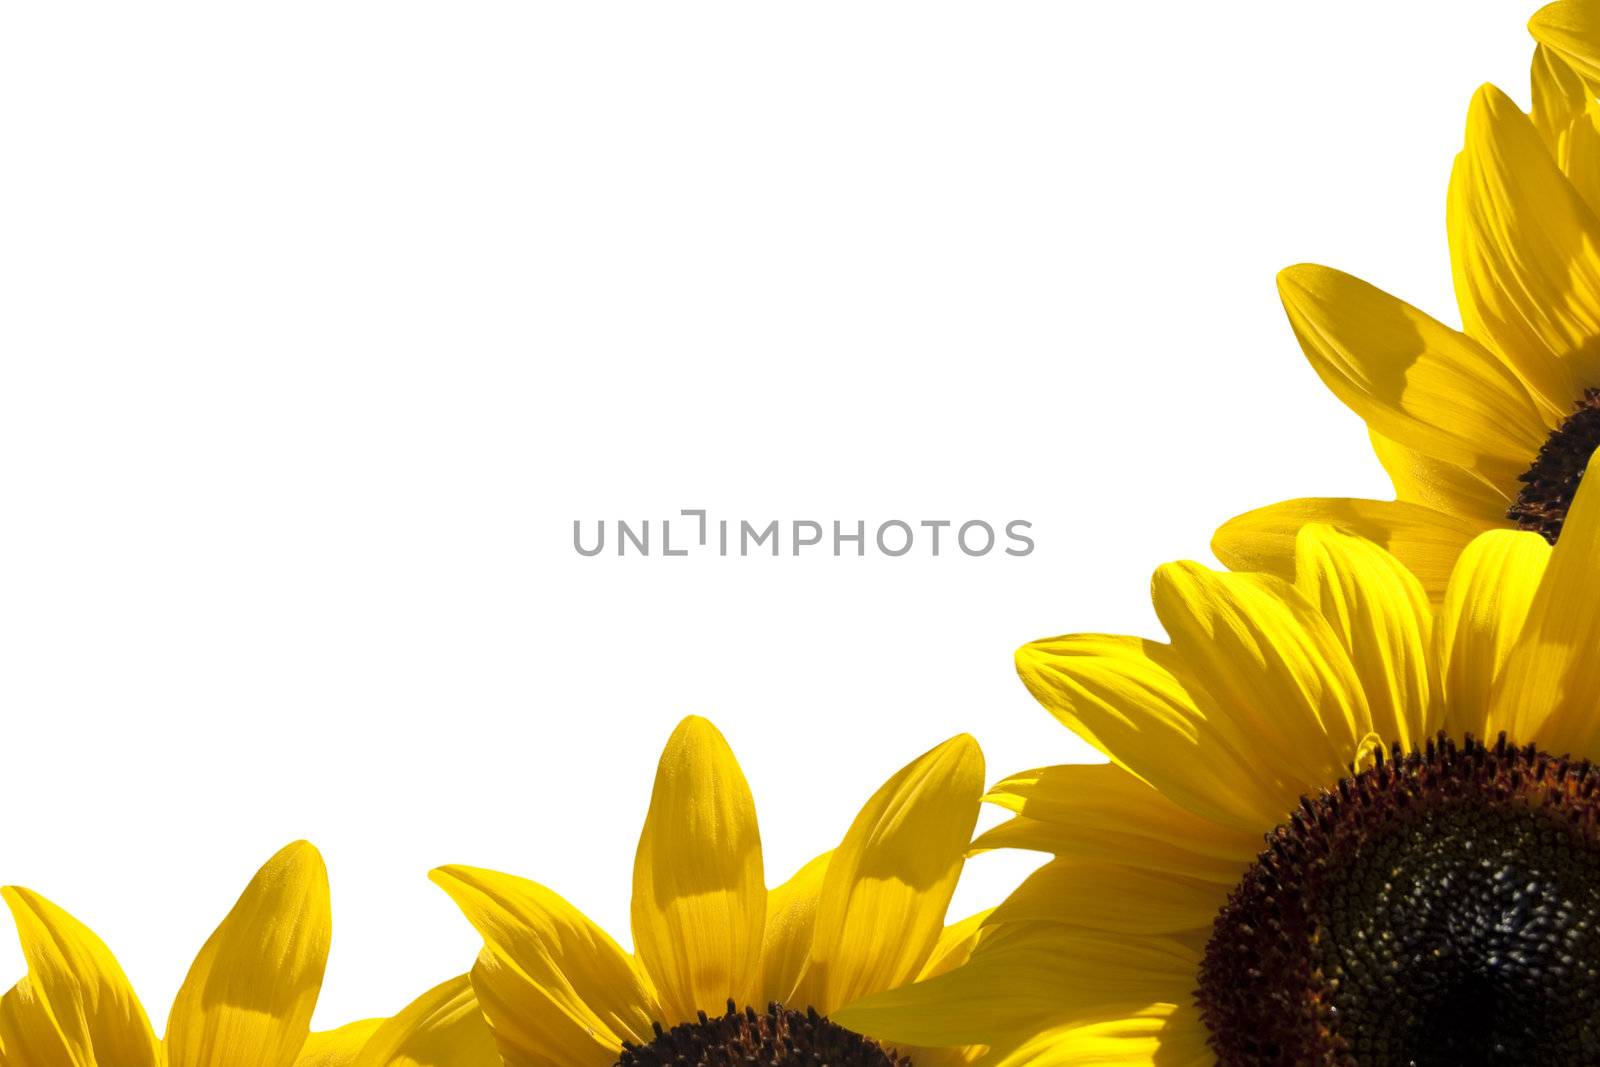 A border of sunflower